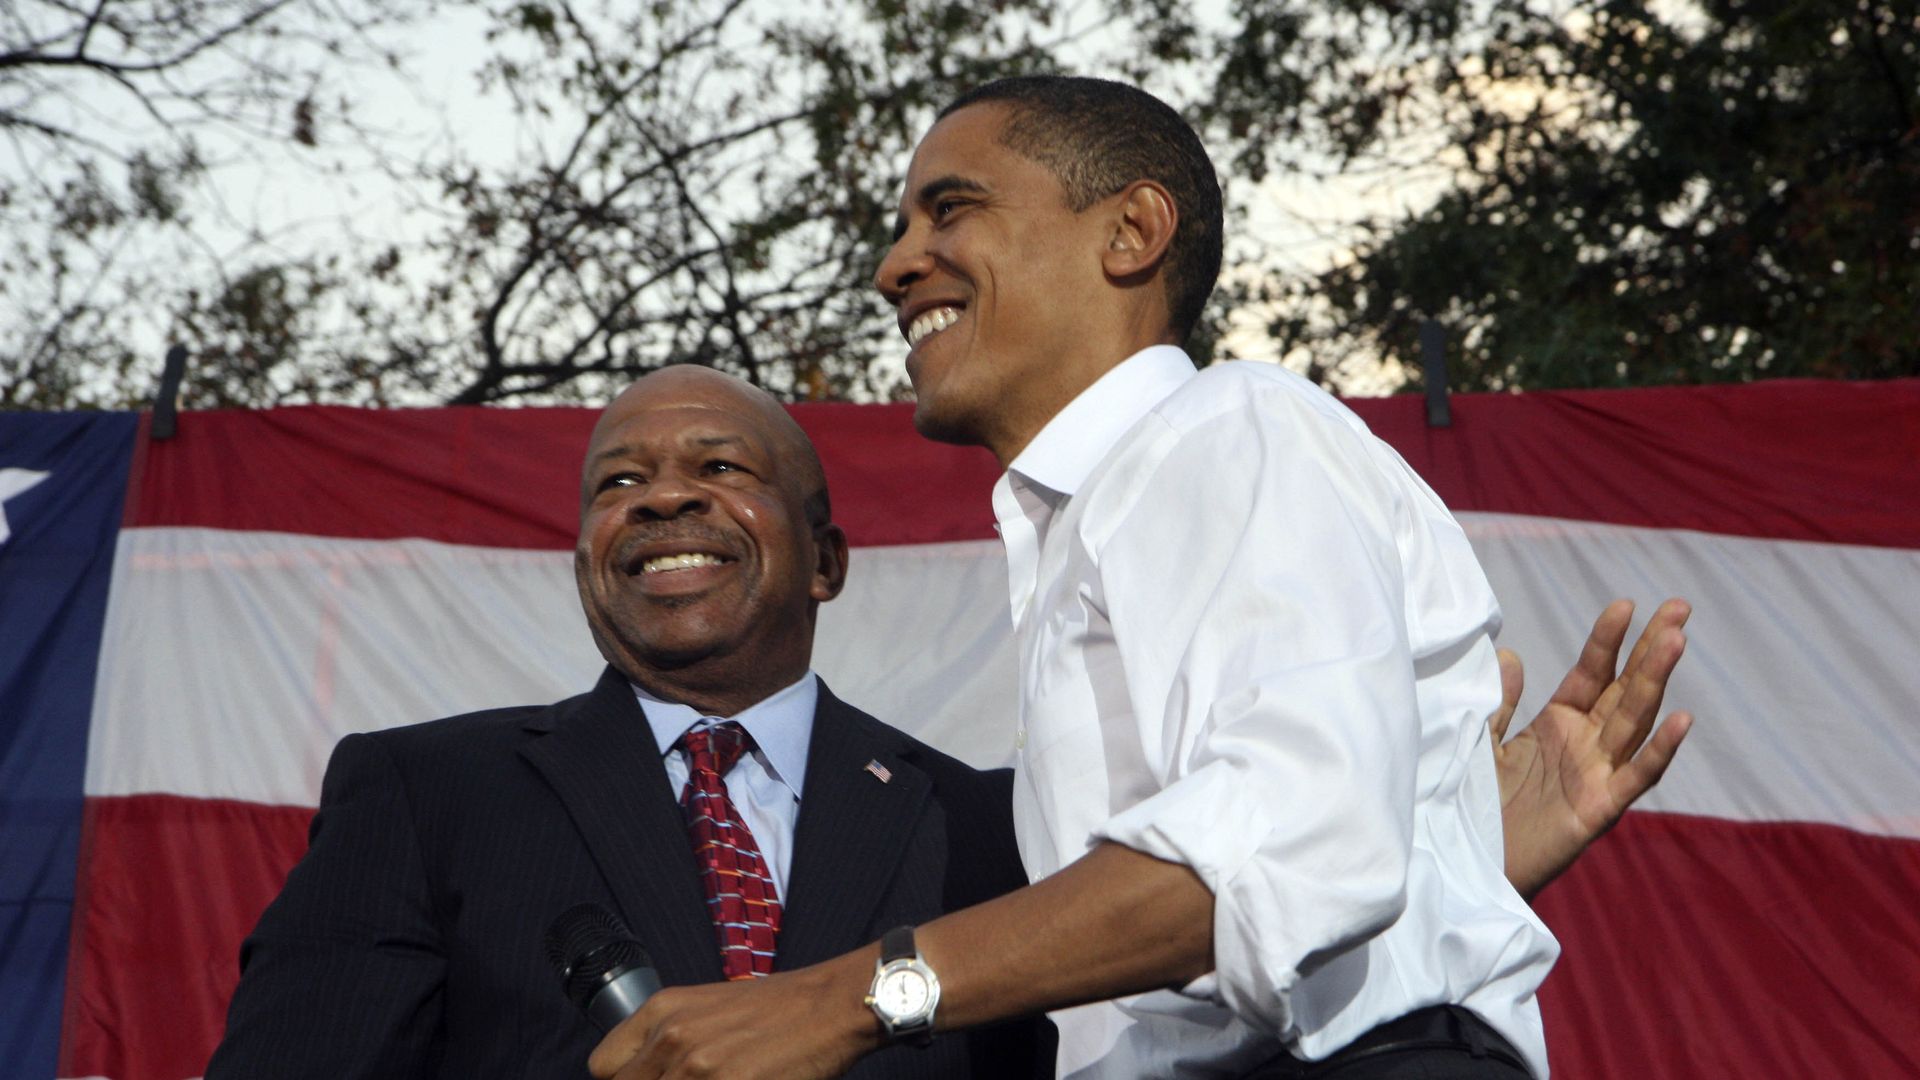 Elijah Cummings and Obama